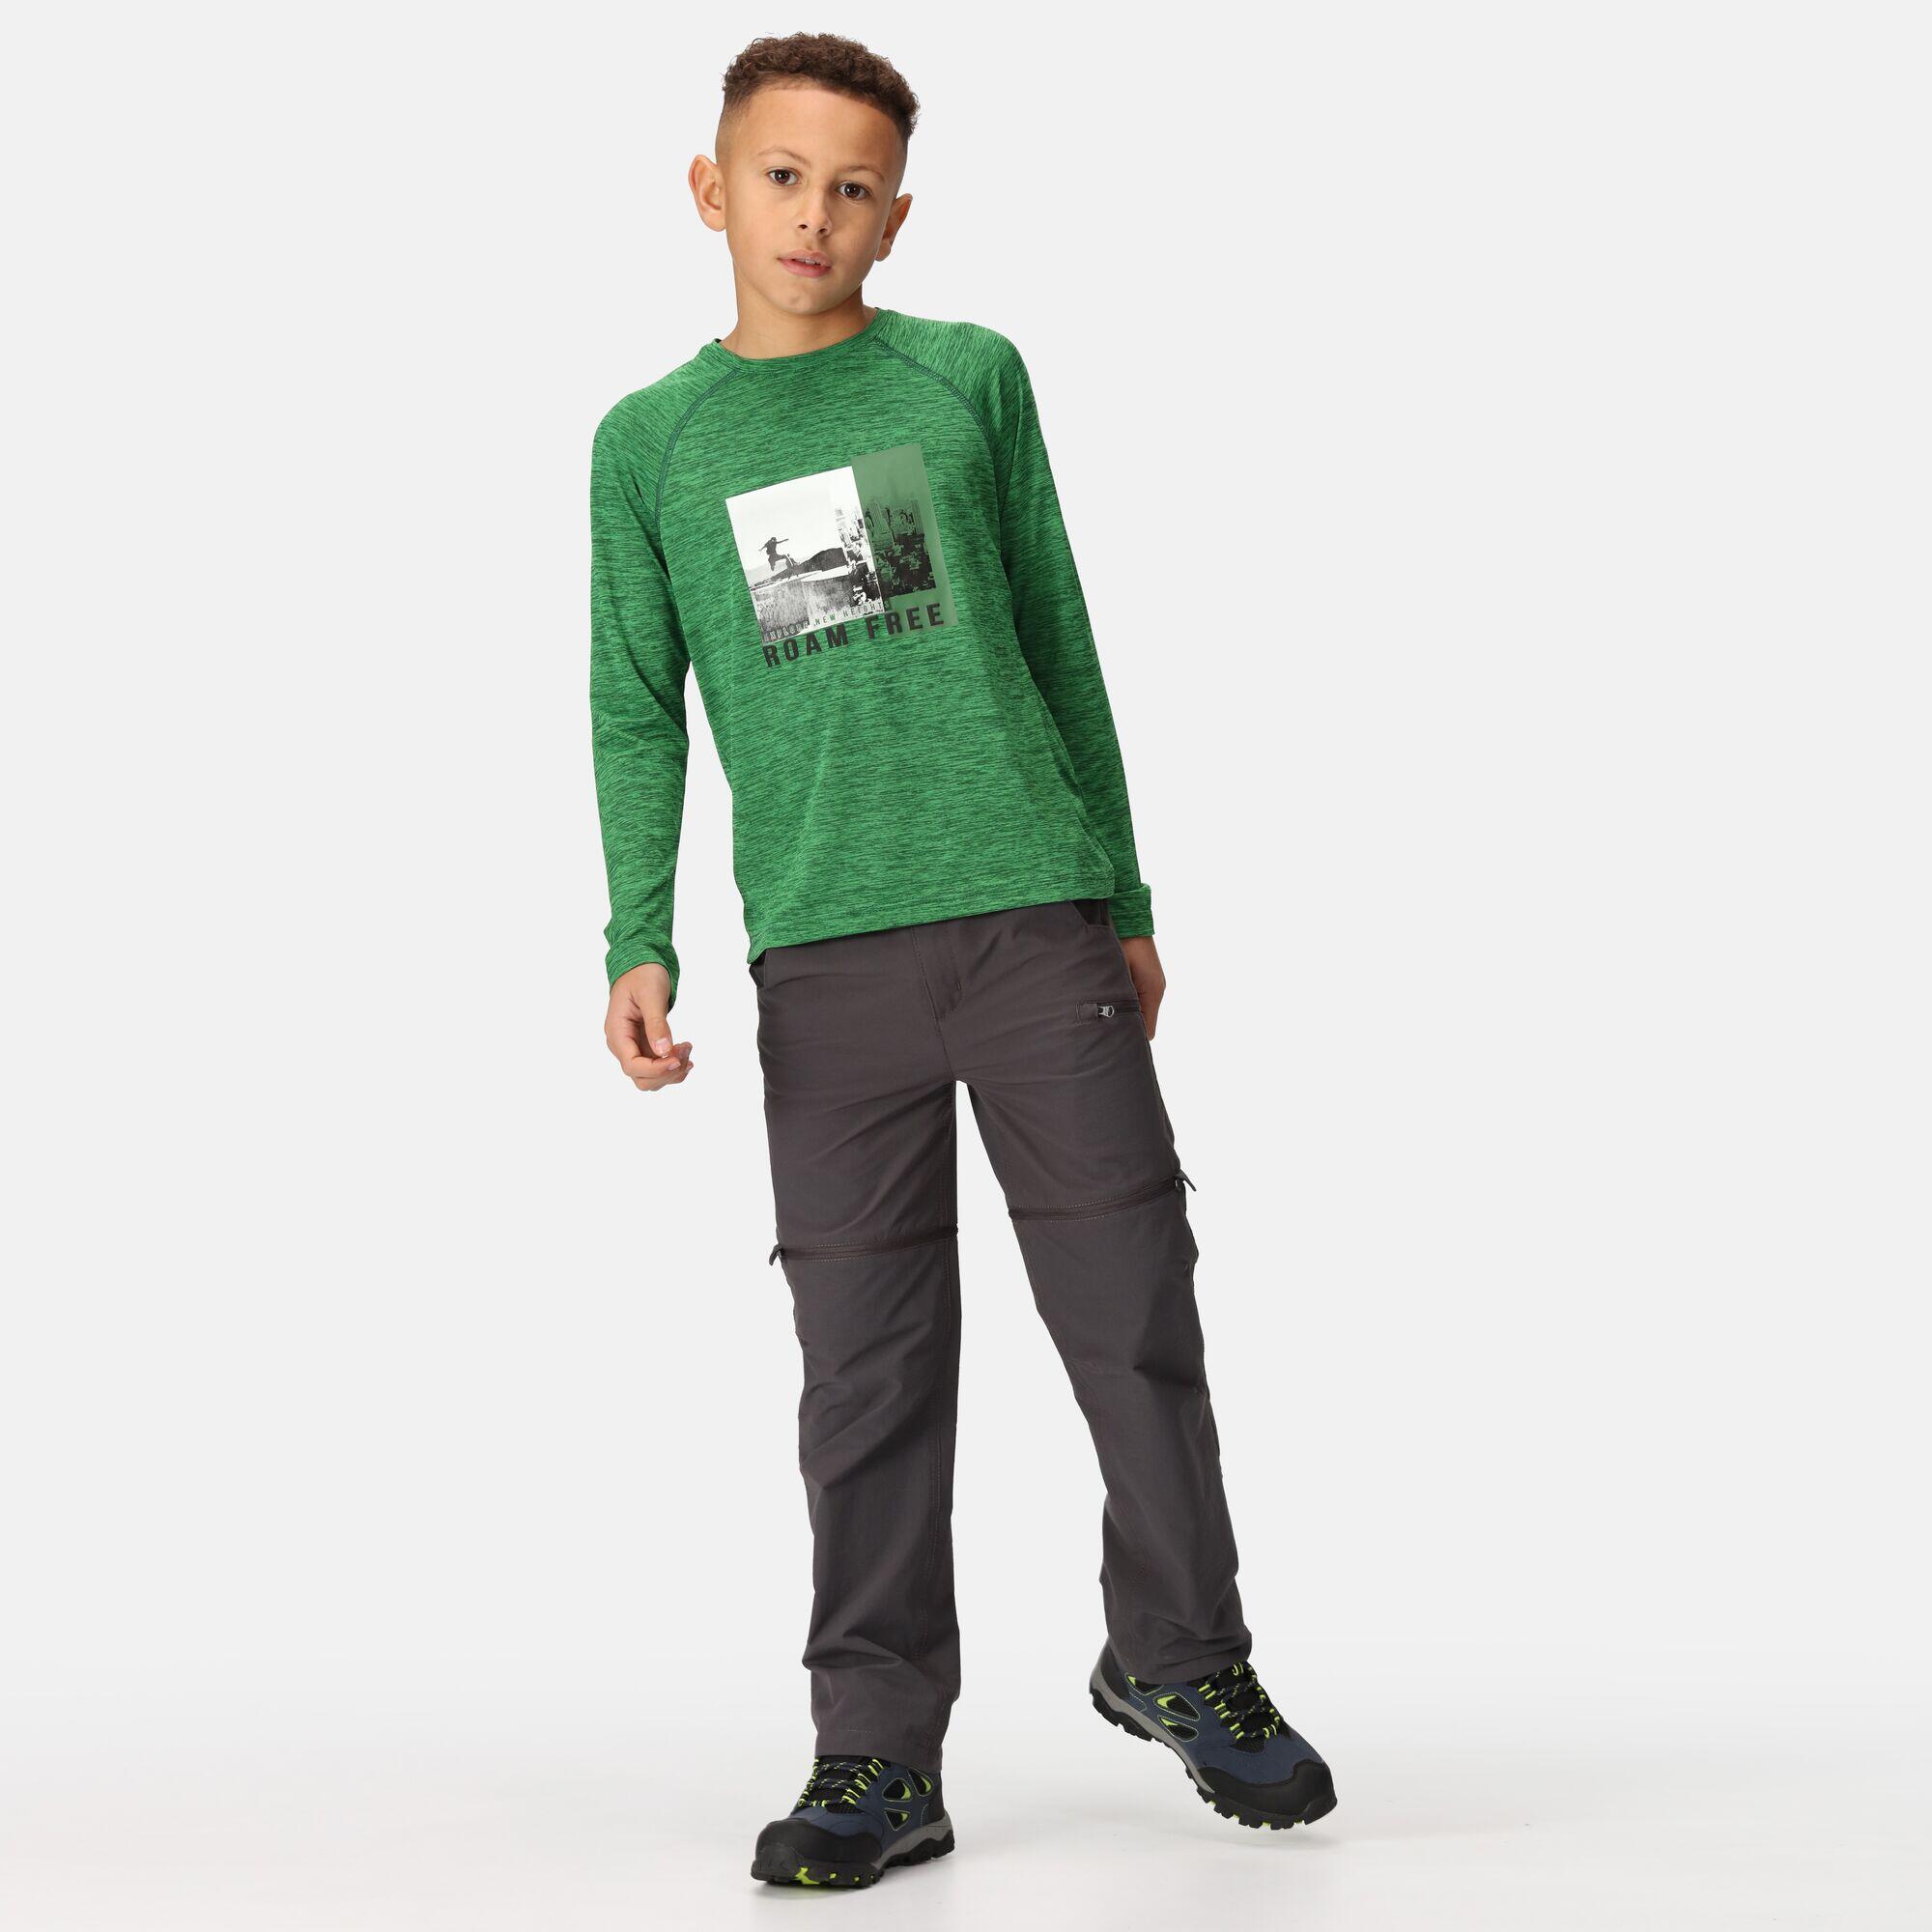 Burnlee Kids' Graphic Walking T-Shirt 3/5